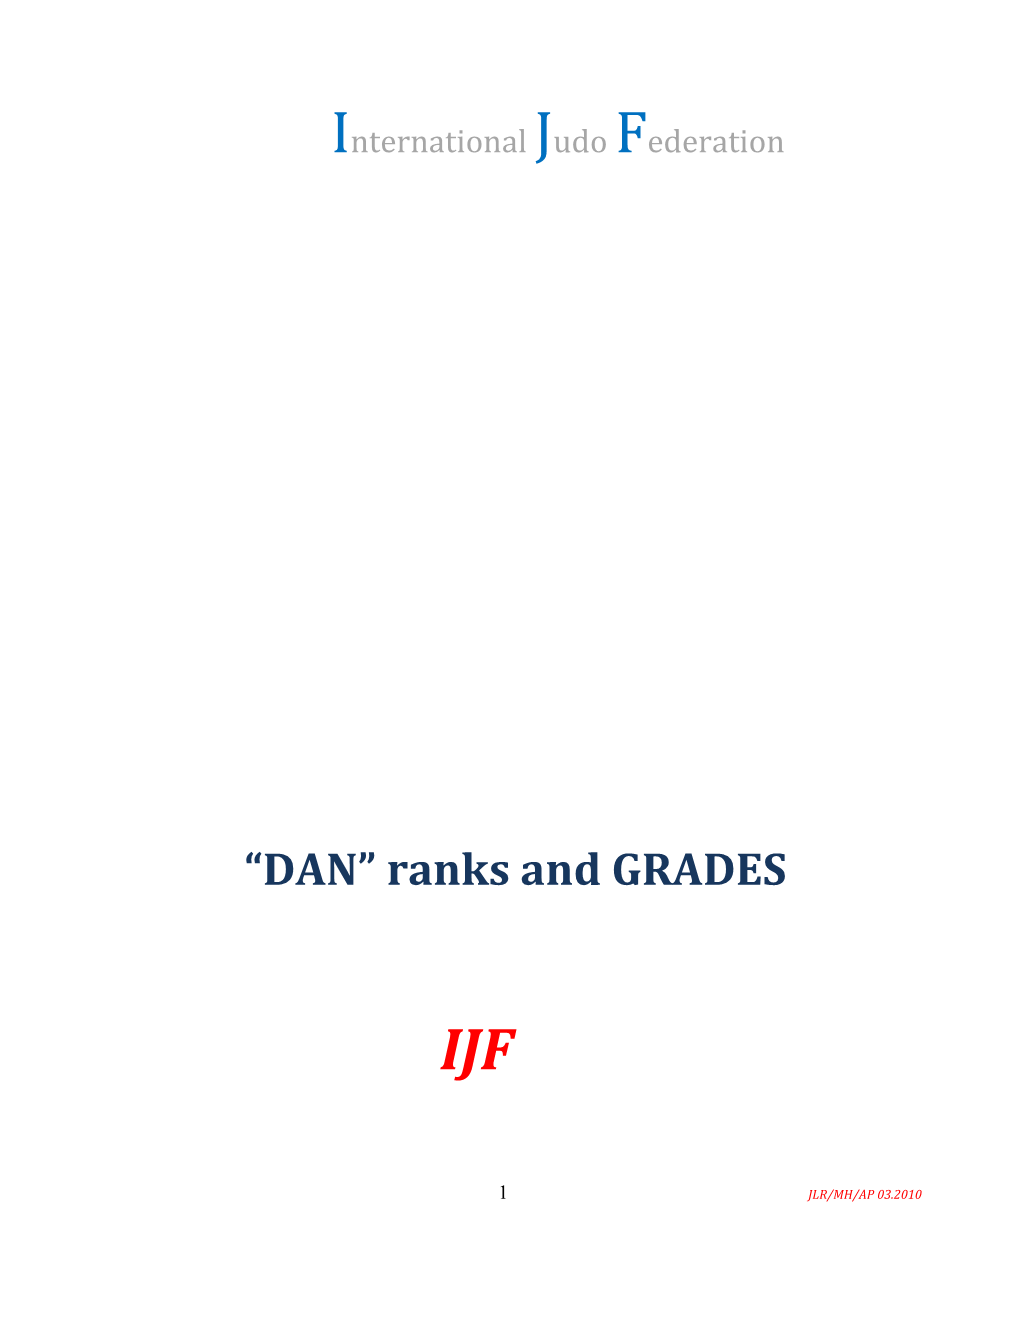 IJF Grade and Dan Rank Commission